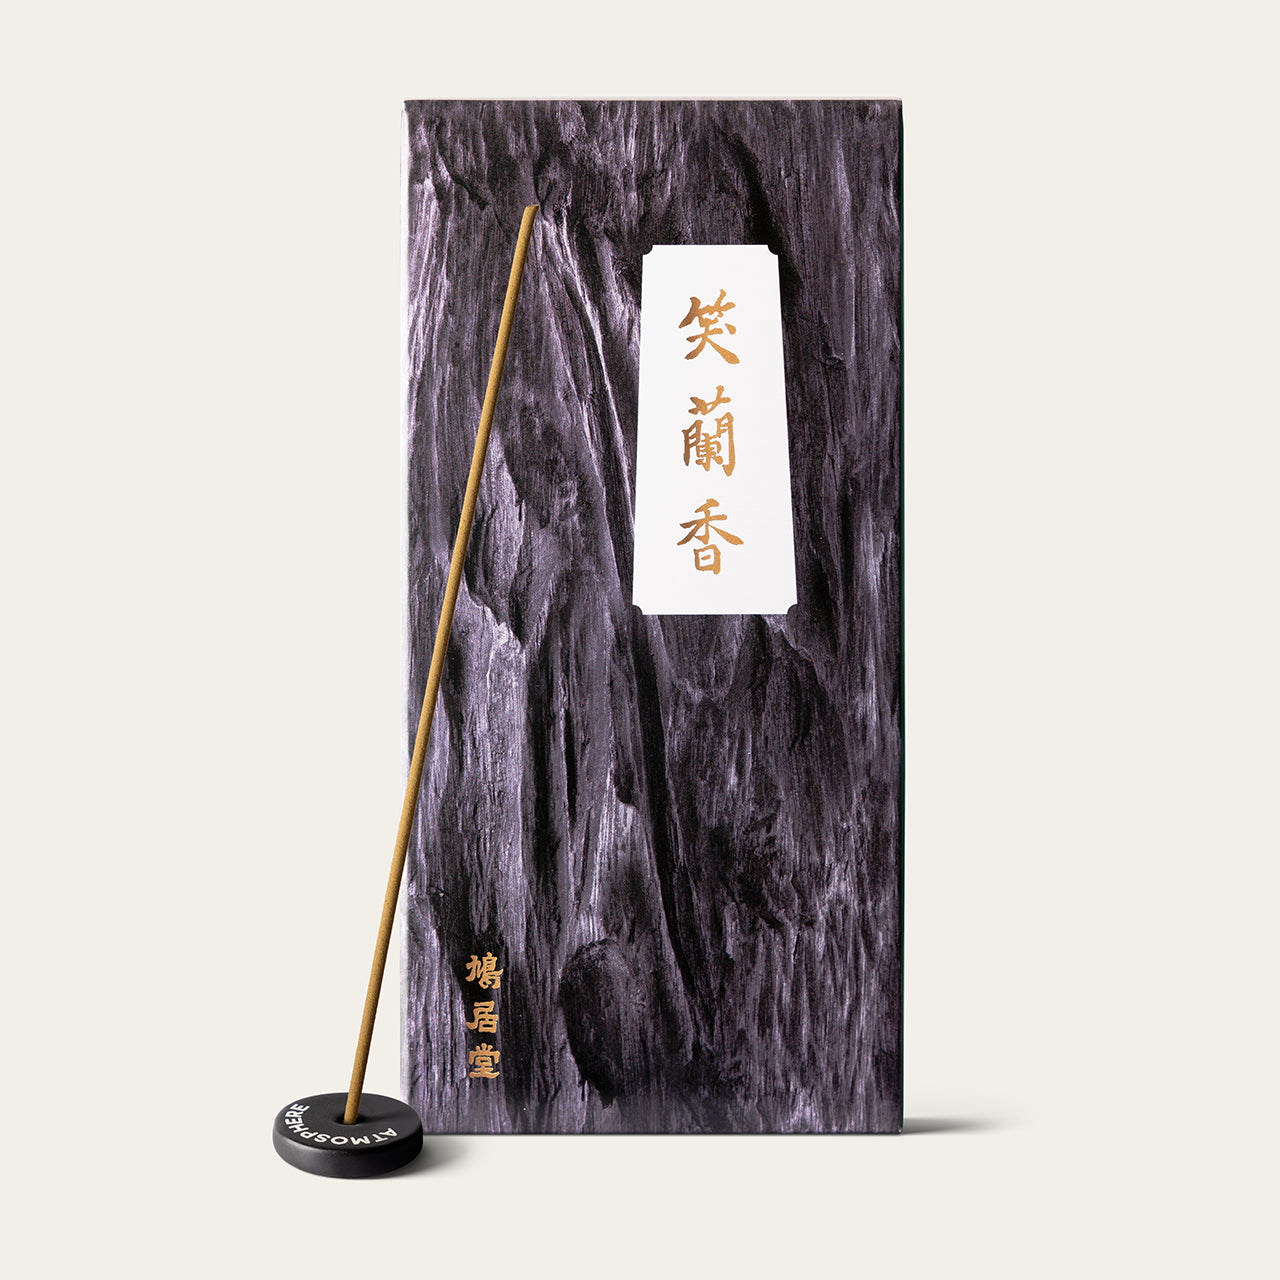 Kyukyodo Premium Laughing Orchid Shoranko Japanese incense sticks (200 sticks) with Atmosphere ceramic incense holder